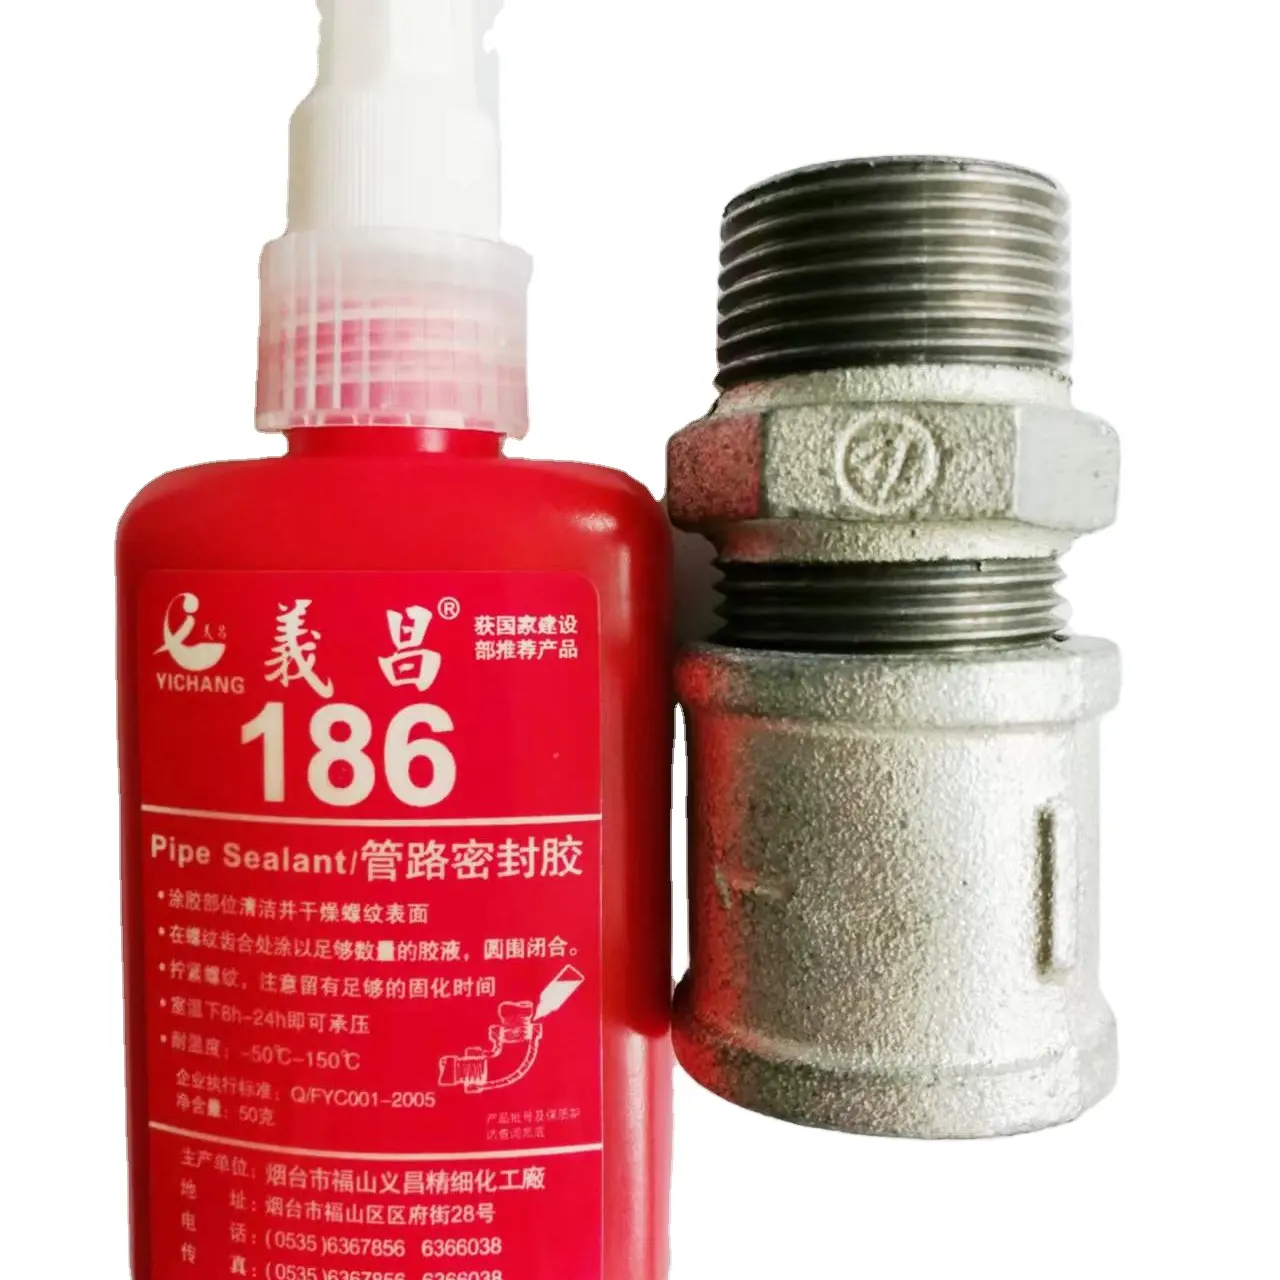 Liquid PTFE Pipe Sealant for metal thread sealing